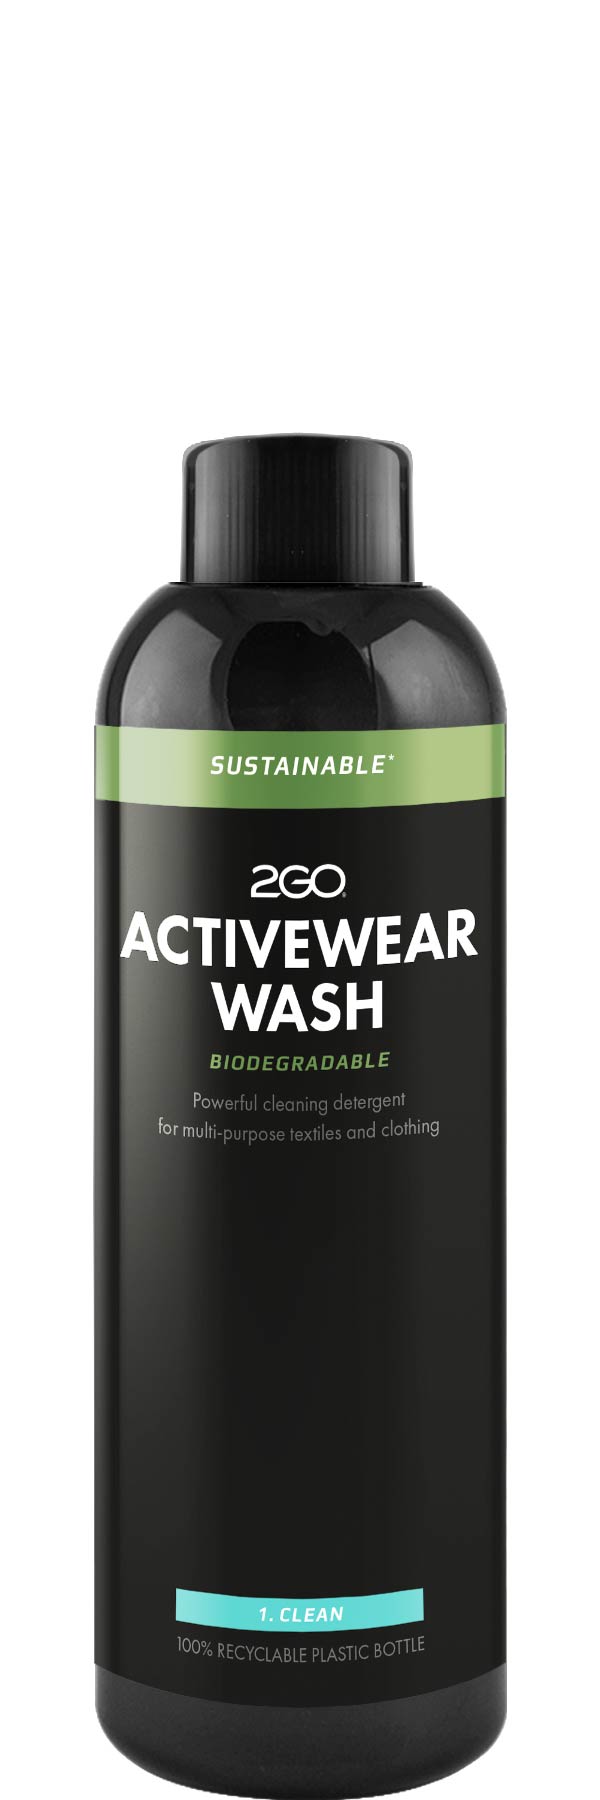 2GO - Sustainable Activewear Wash